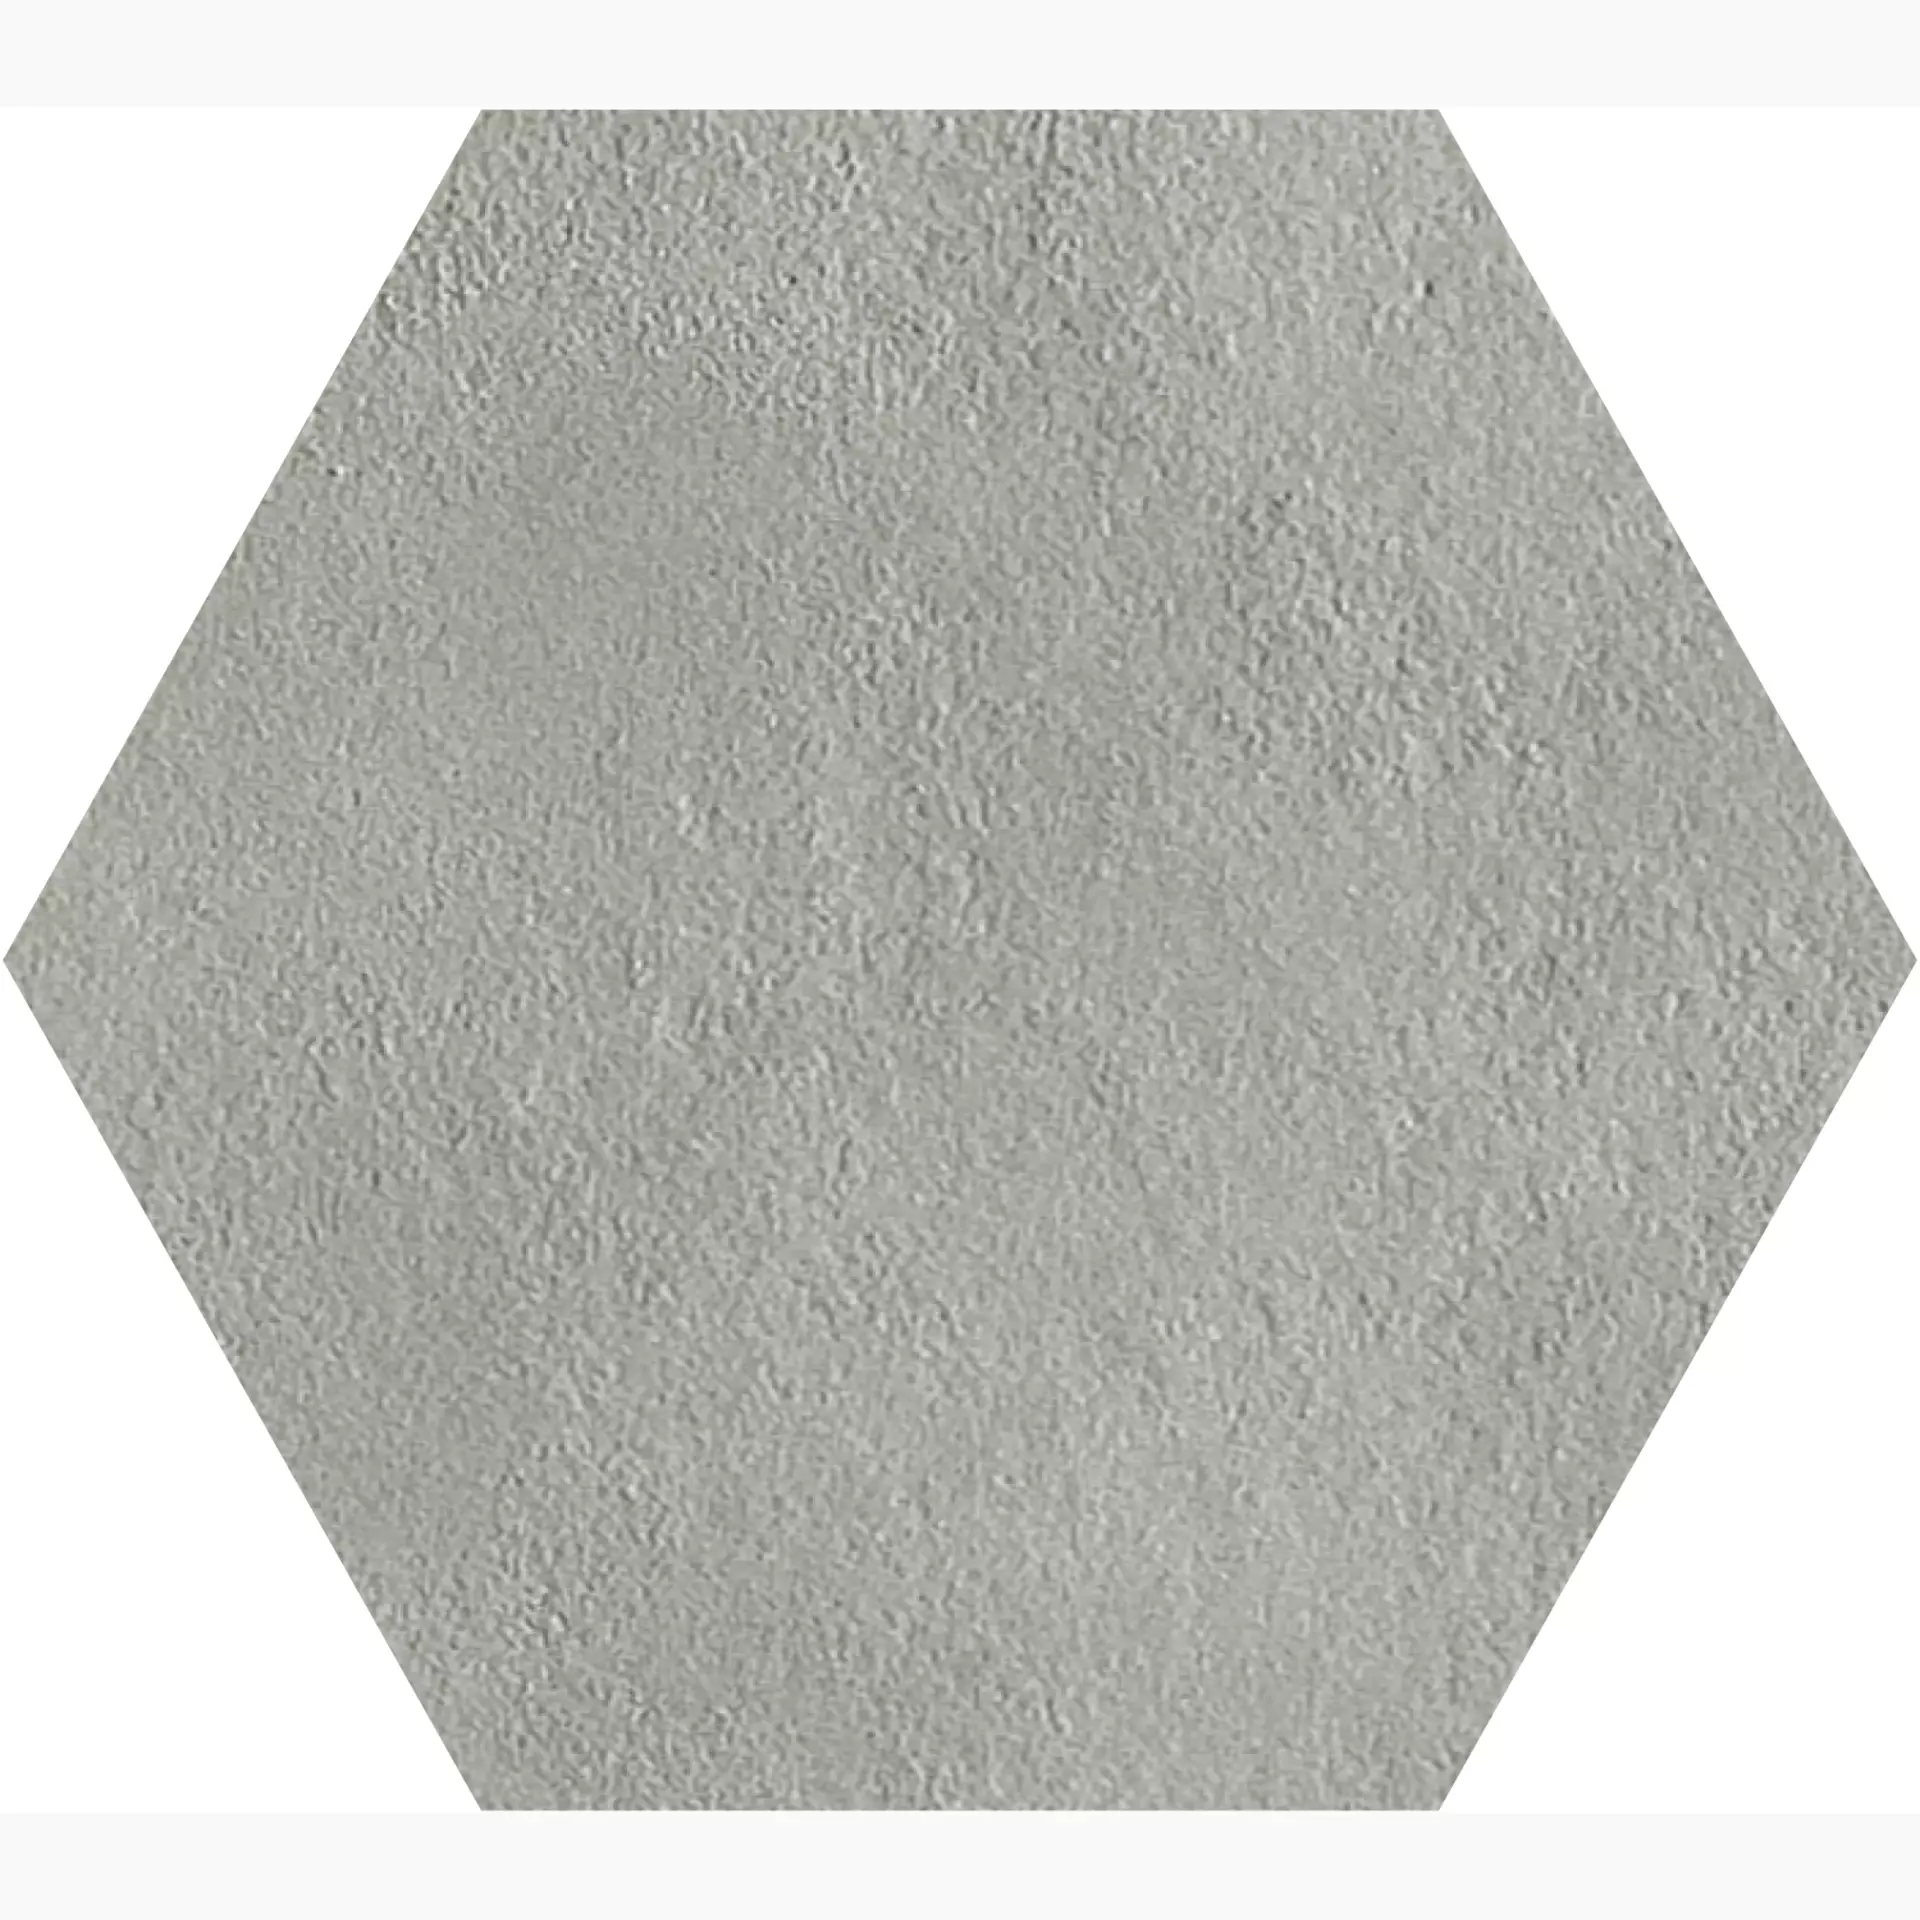 Gigacer Argilla Dry Material Decor Small Hexagon PO9ESADRY 16x18cm 6mm